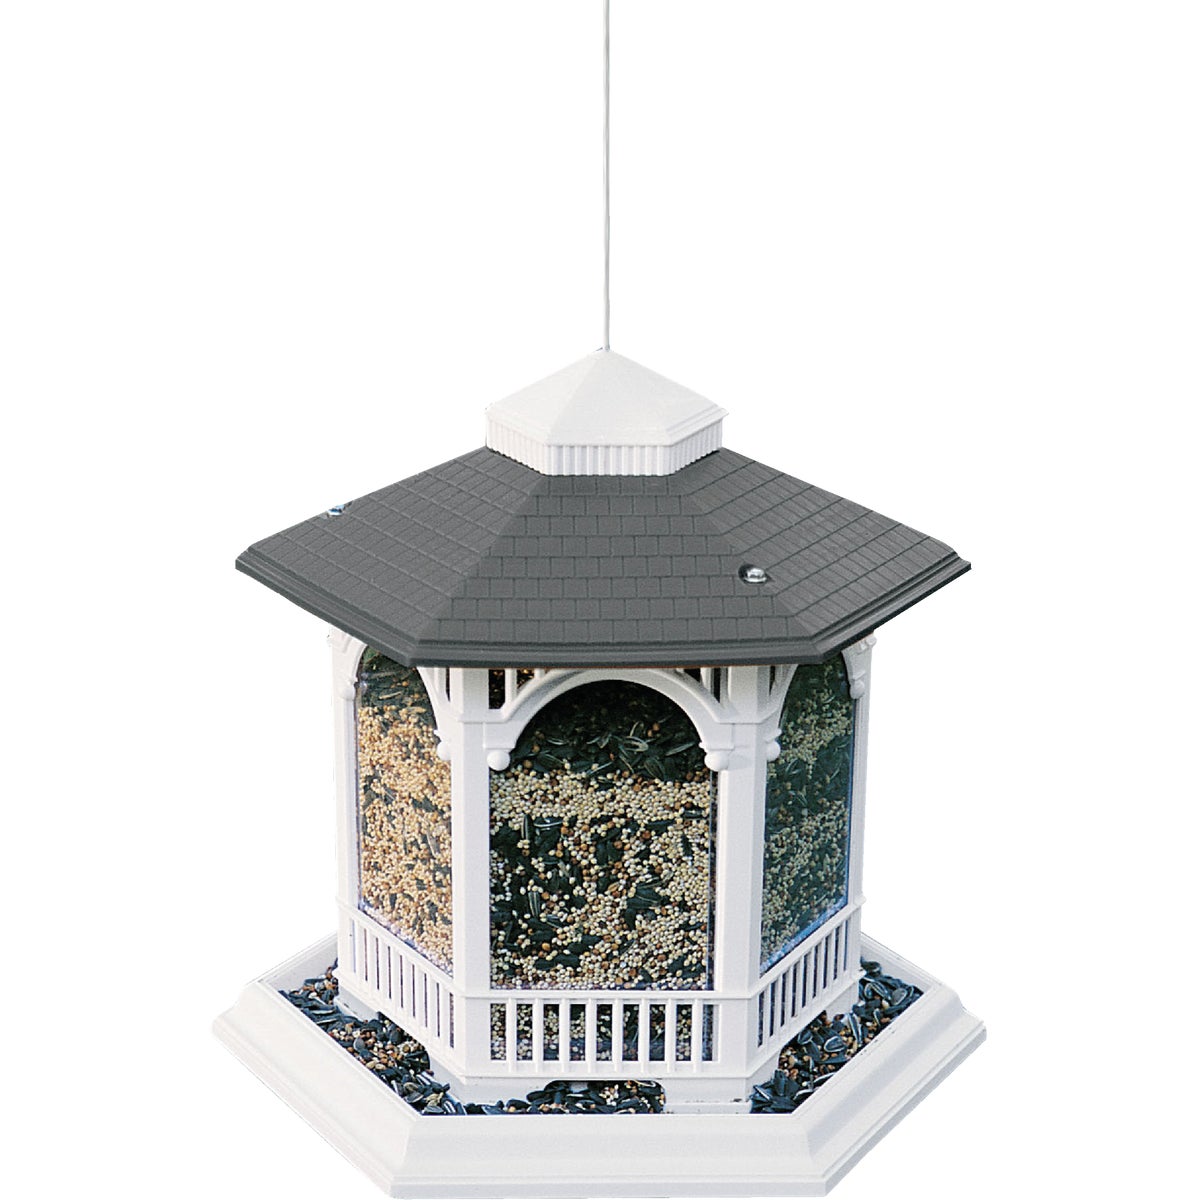 Item 704137, Stylish and decorative gazebo-style bird feeder.